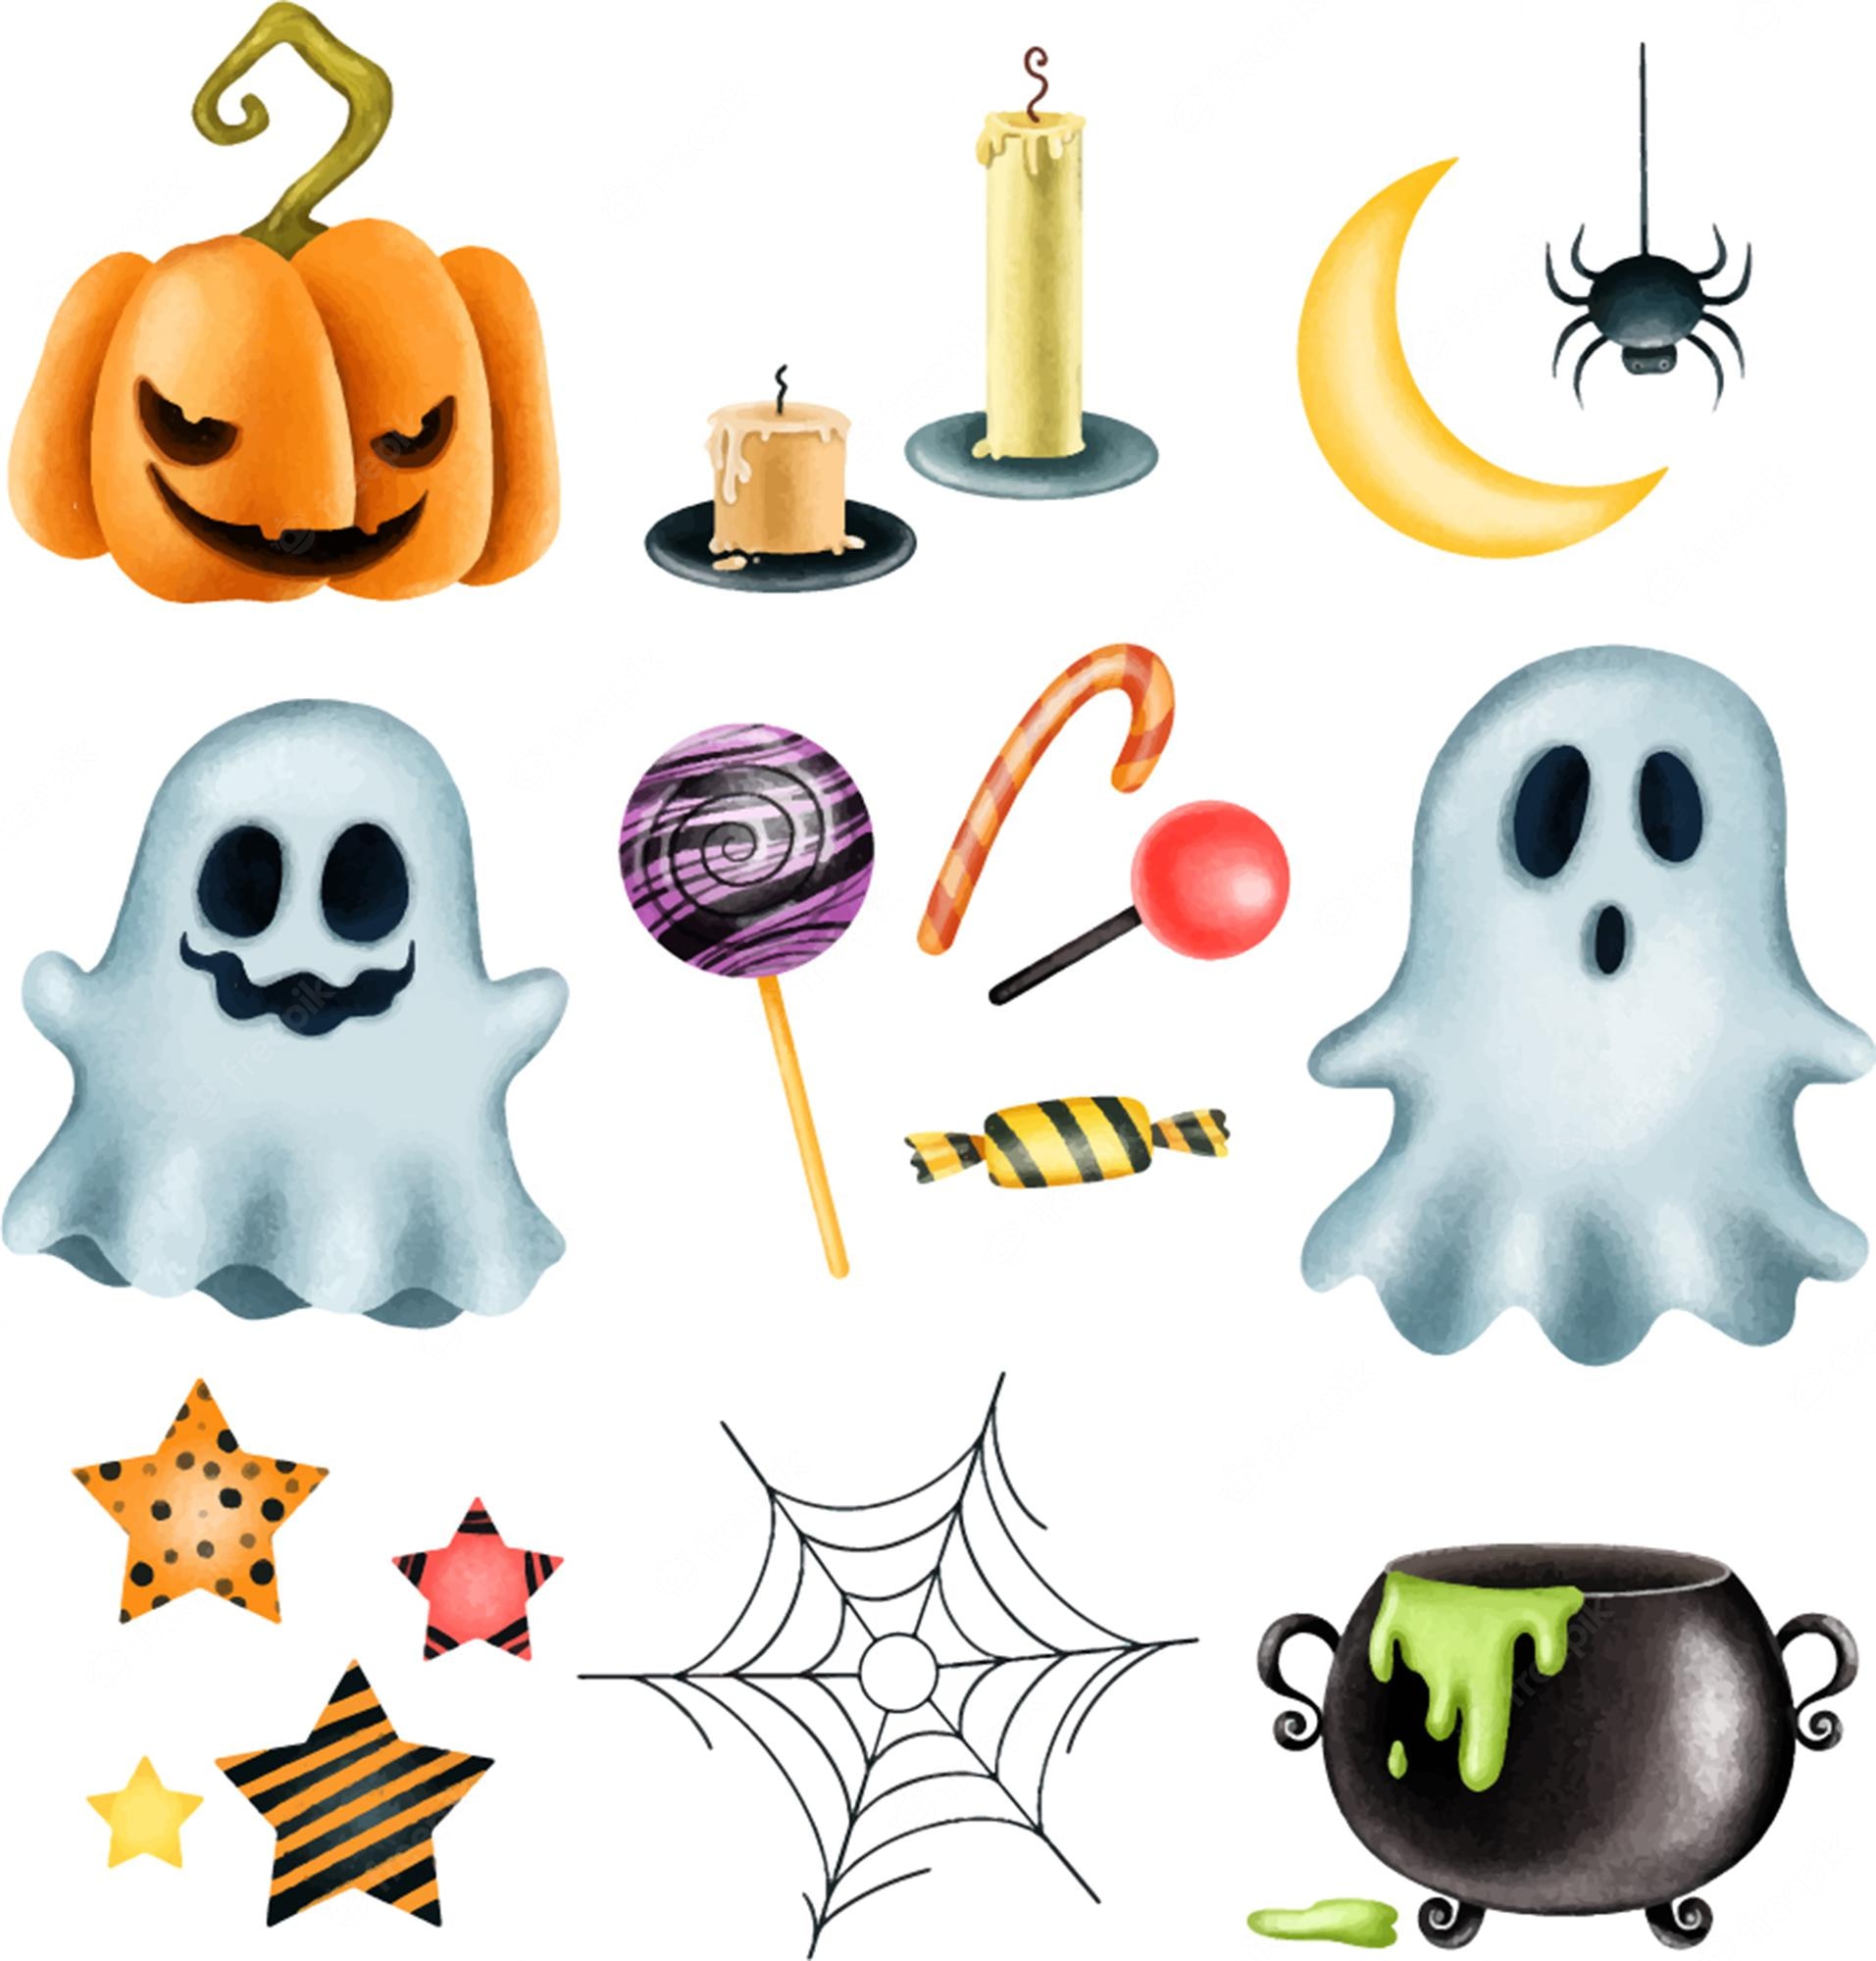 Halloween clipart set spooky pumpkin icons Vector Image - Clip Art Library